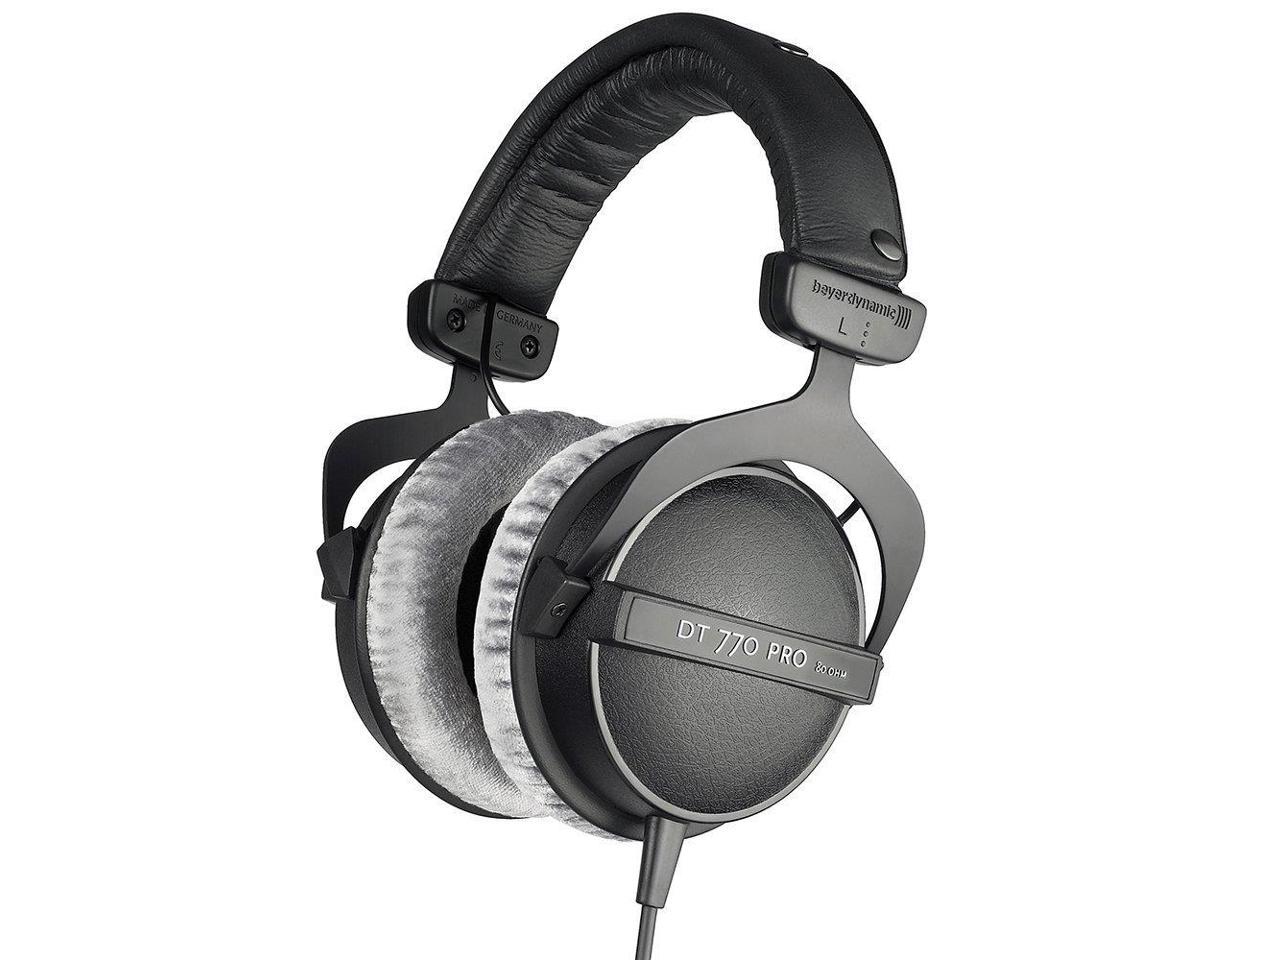 Beyerdynamic DT 770 Pro 80 Ohm Studio Headphones + $10GC @Newegg $124